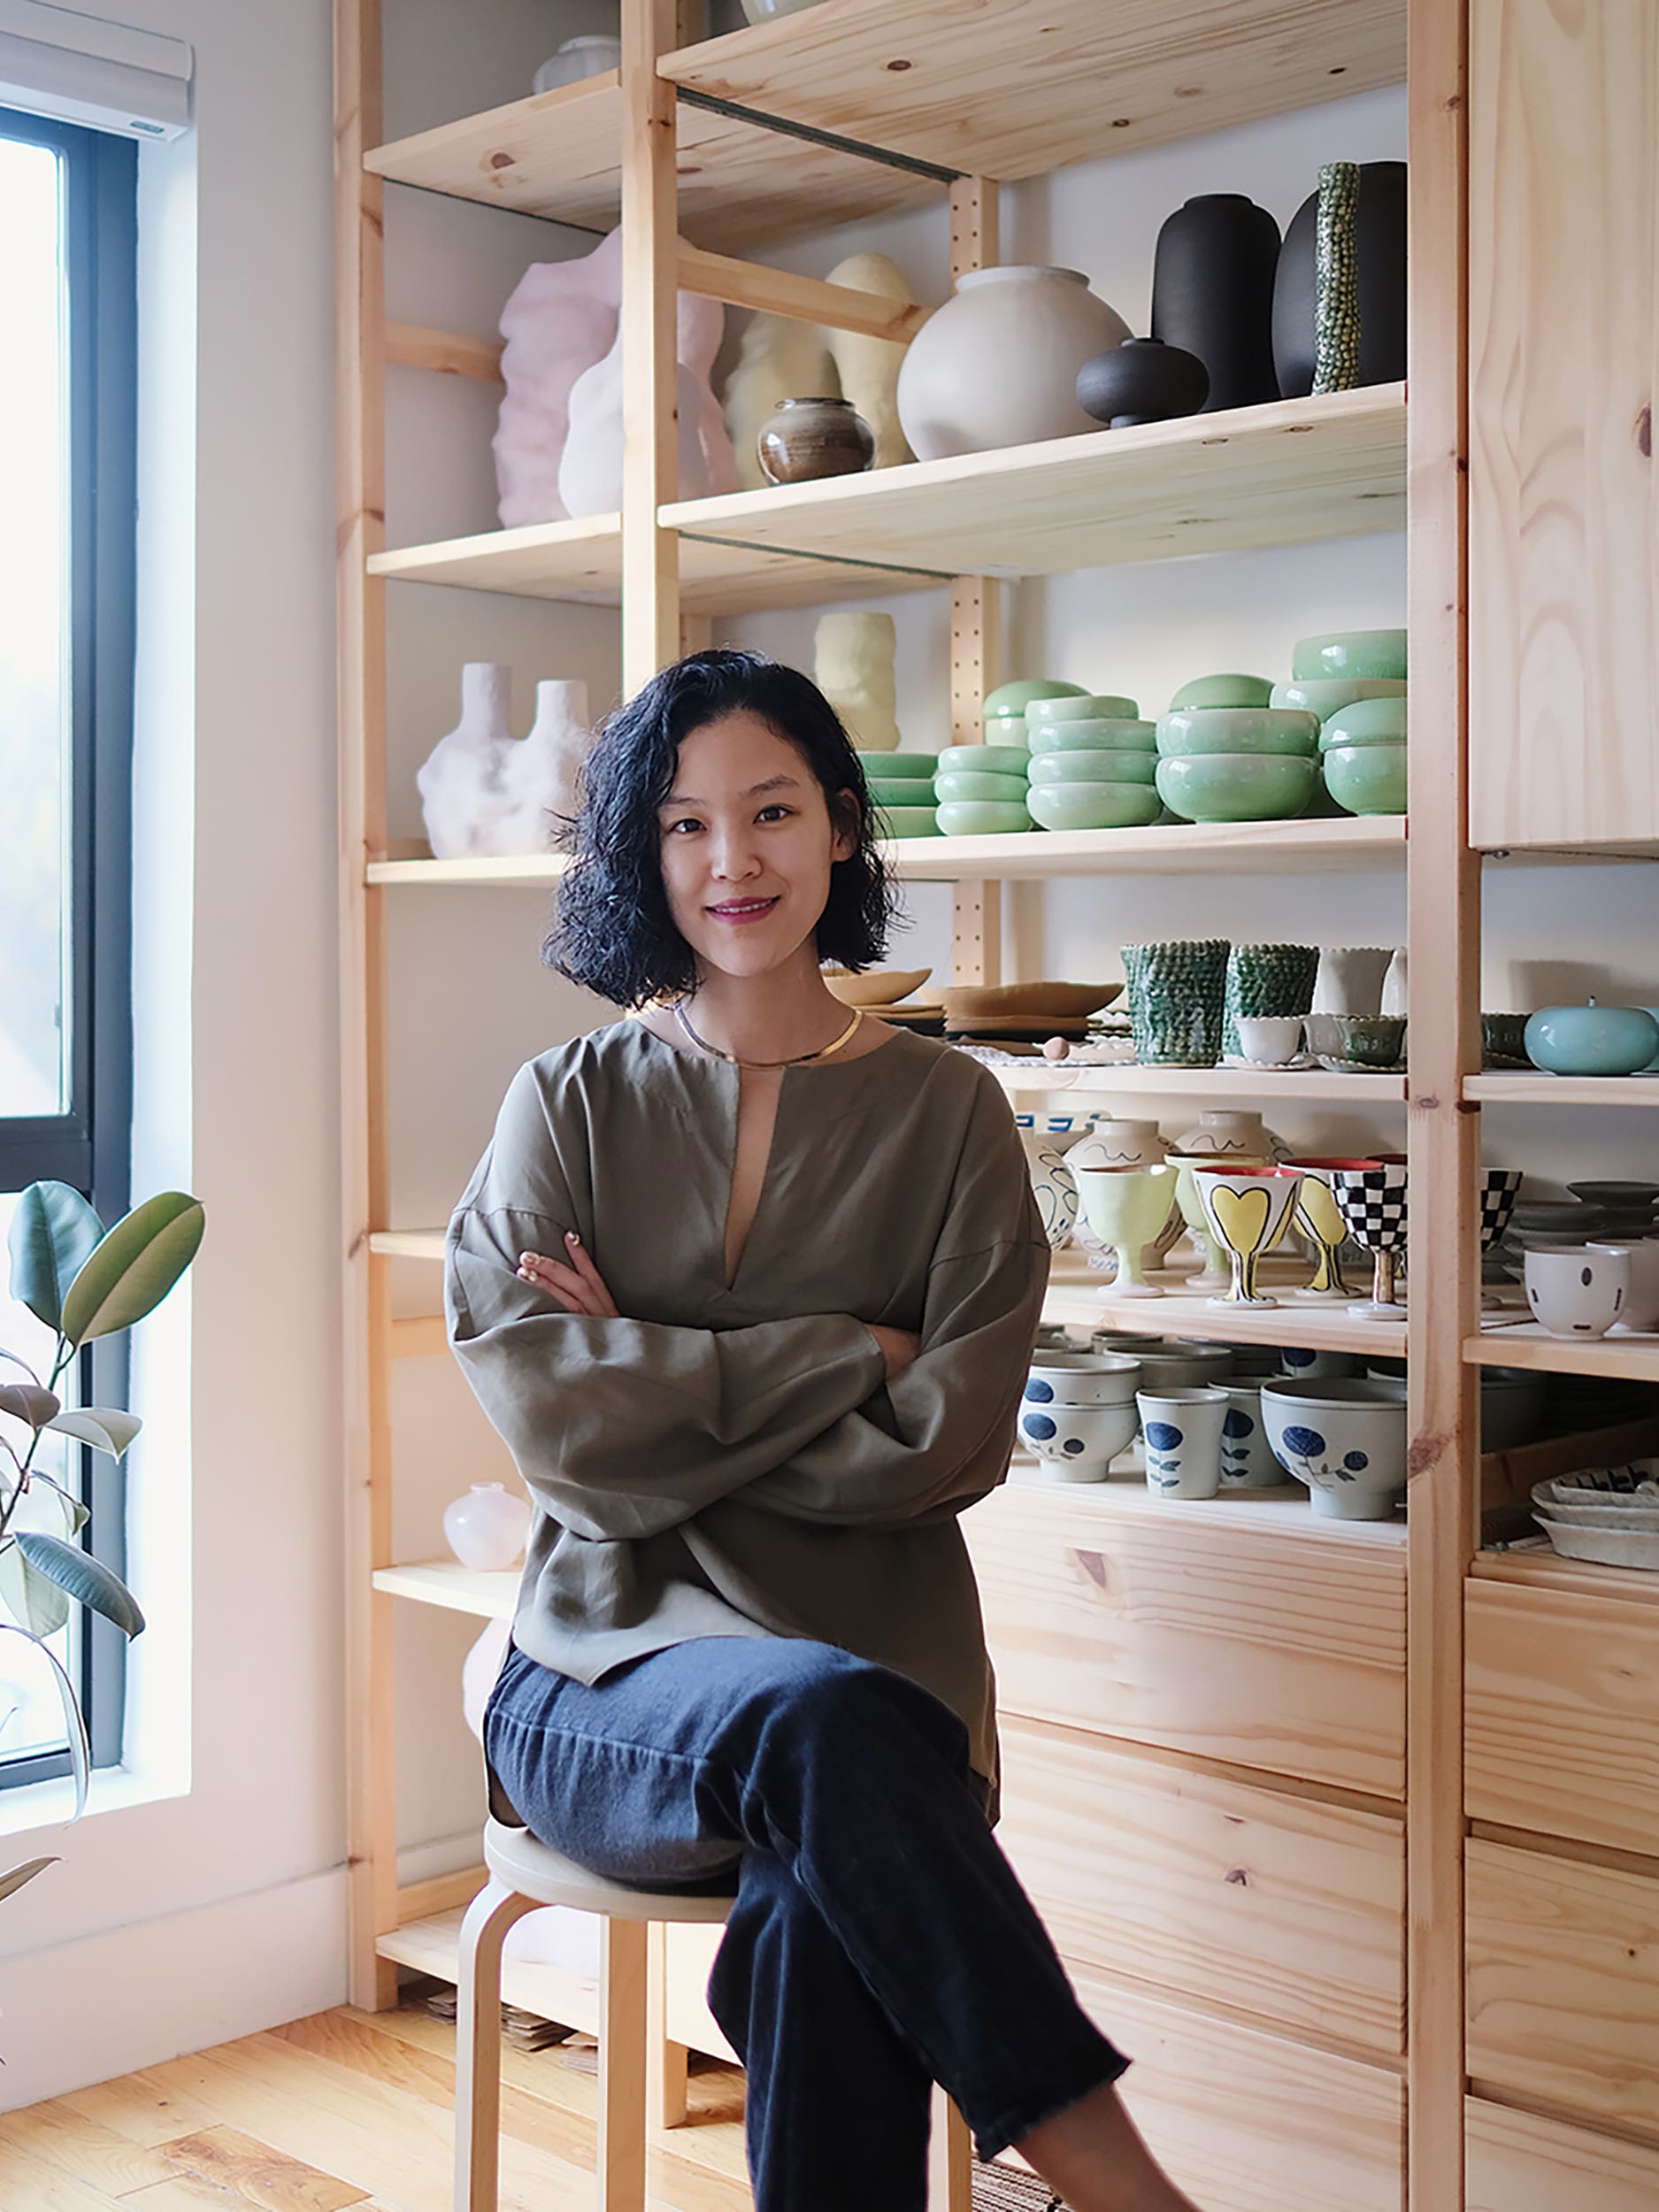 IKEA Shelving Puts the Studio Kos Founder’s Precious Korean Finds on Display